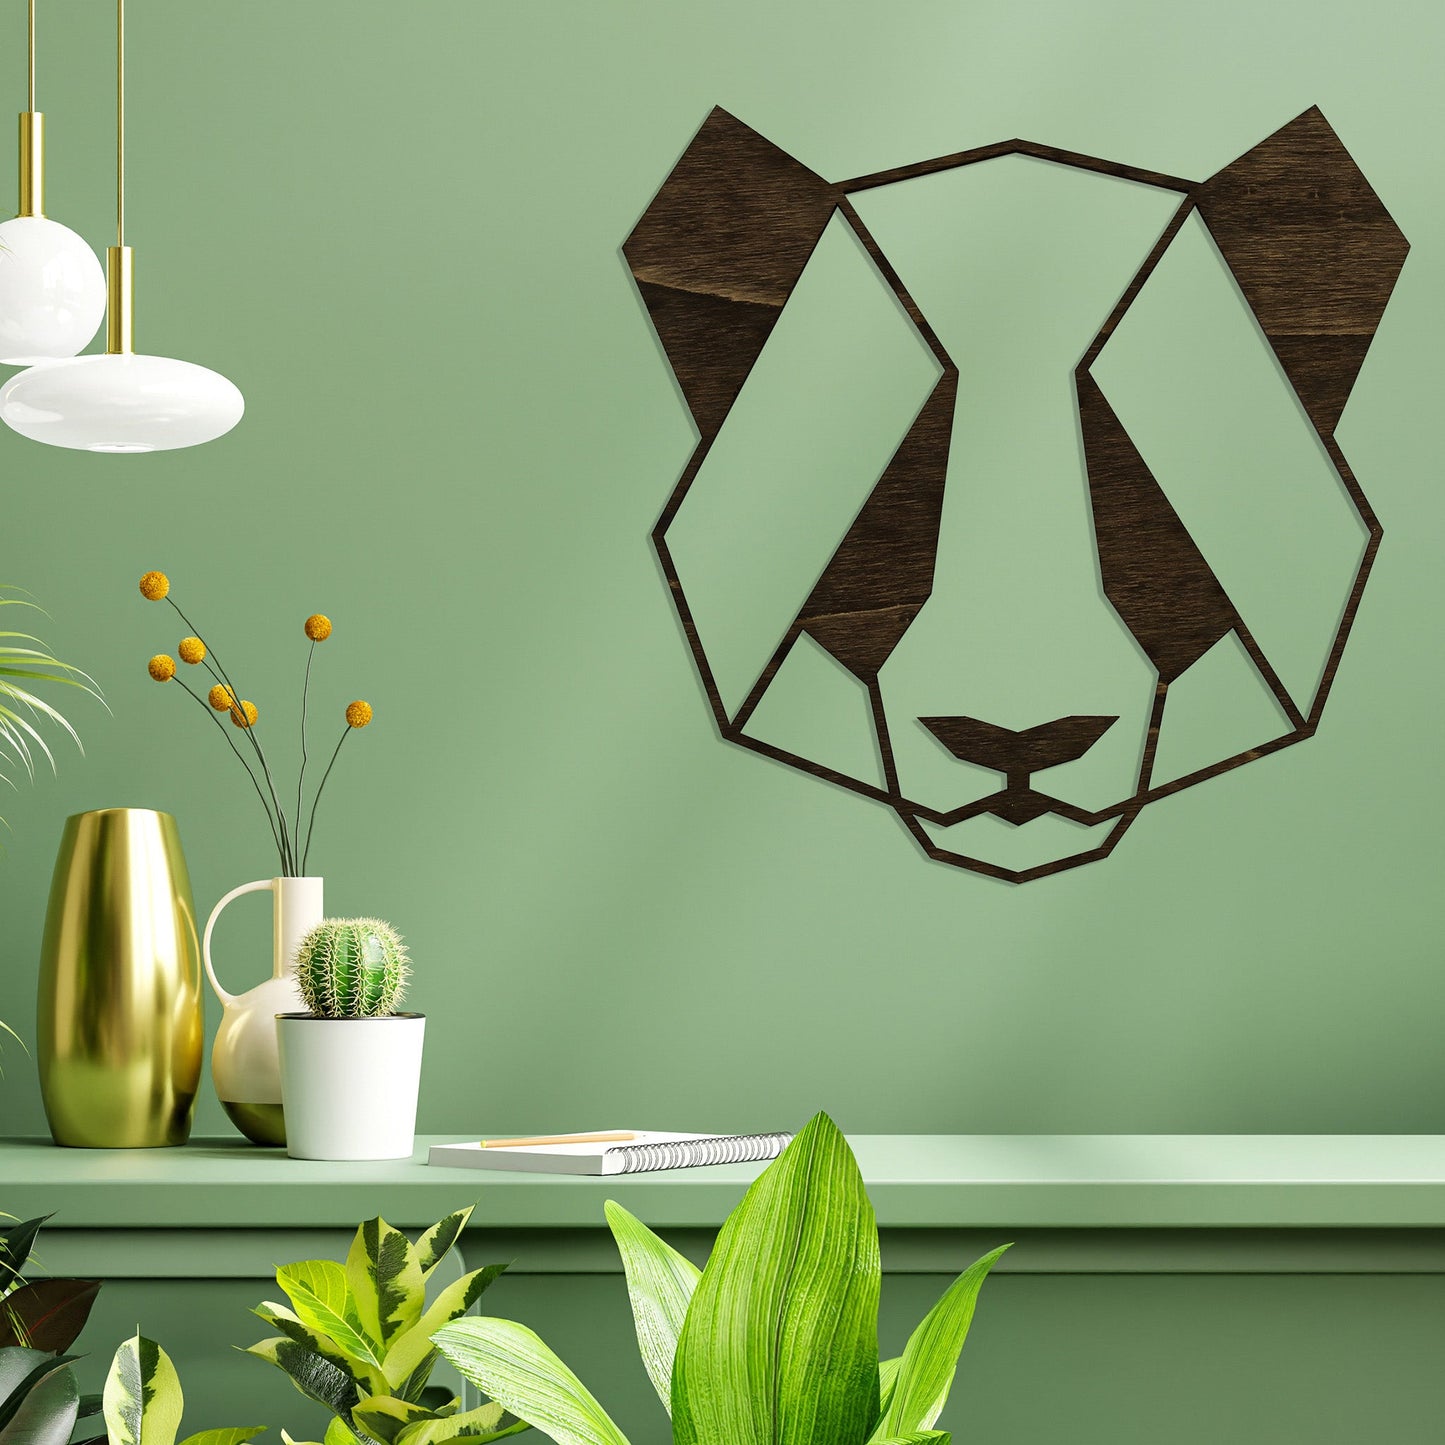 Wandbild Holz "Panda" - Nanino Design Onlineshop -